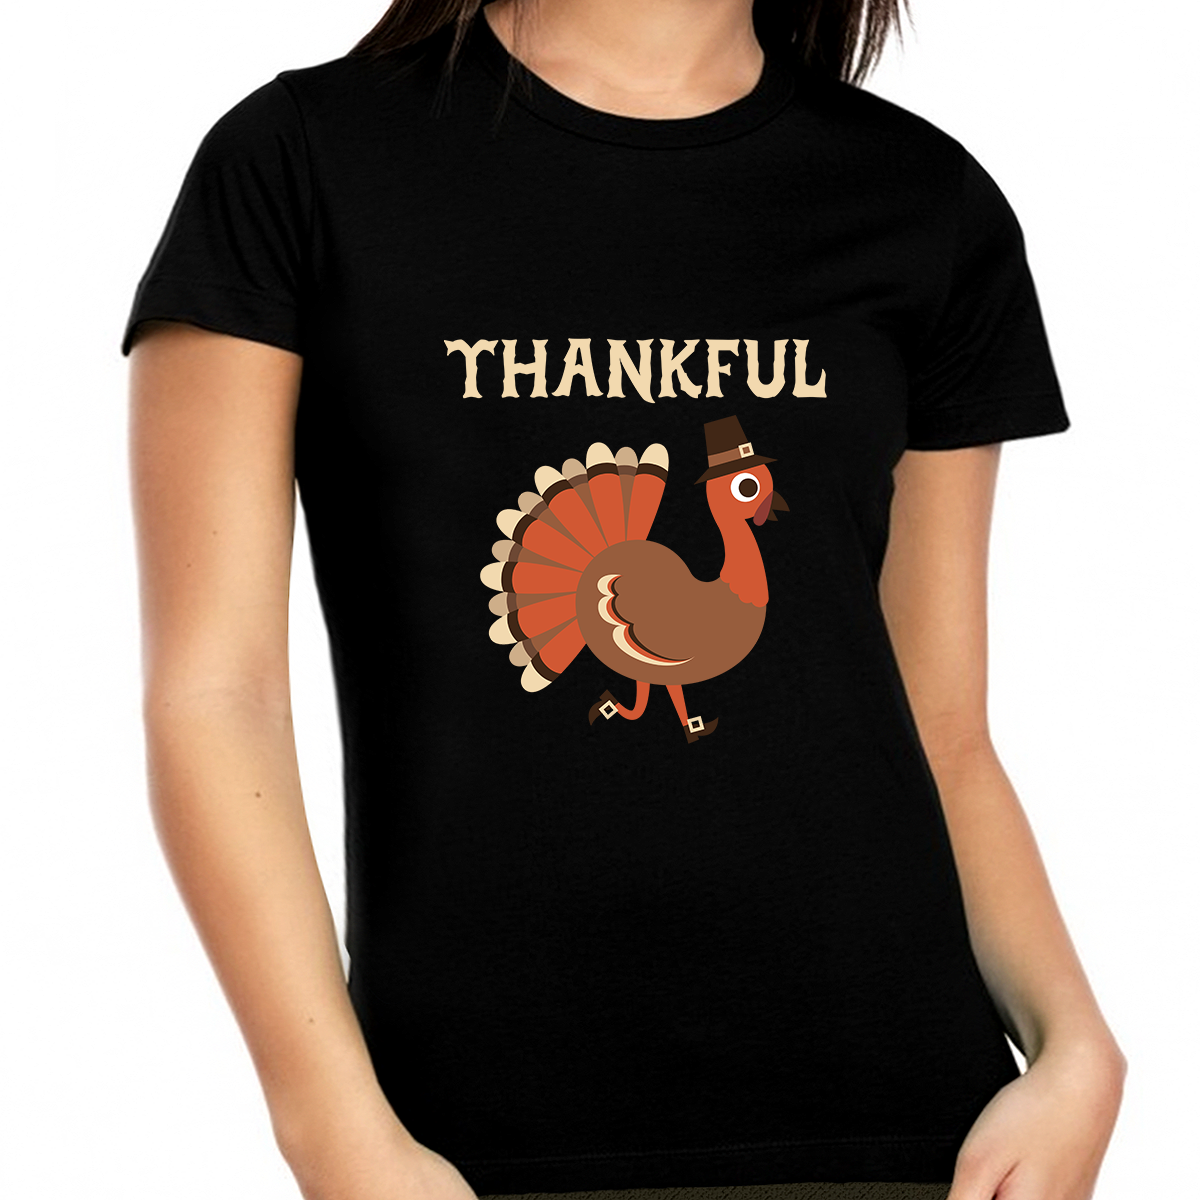 Thanksgiving Shirt for Women Plus Size Funny Turkey Shirt Plus Size Fall Shirt Thankful Shirts for Women